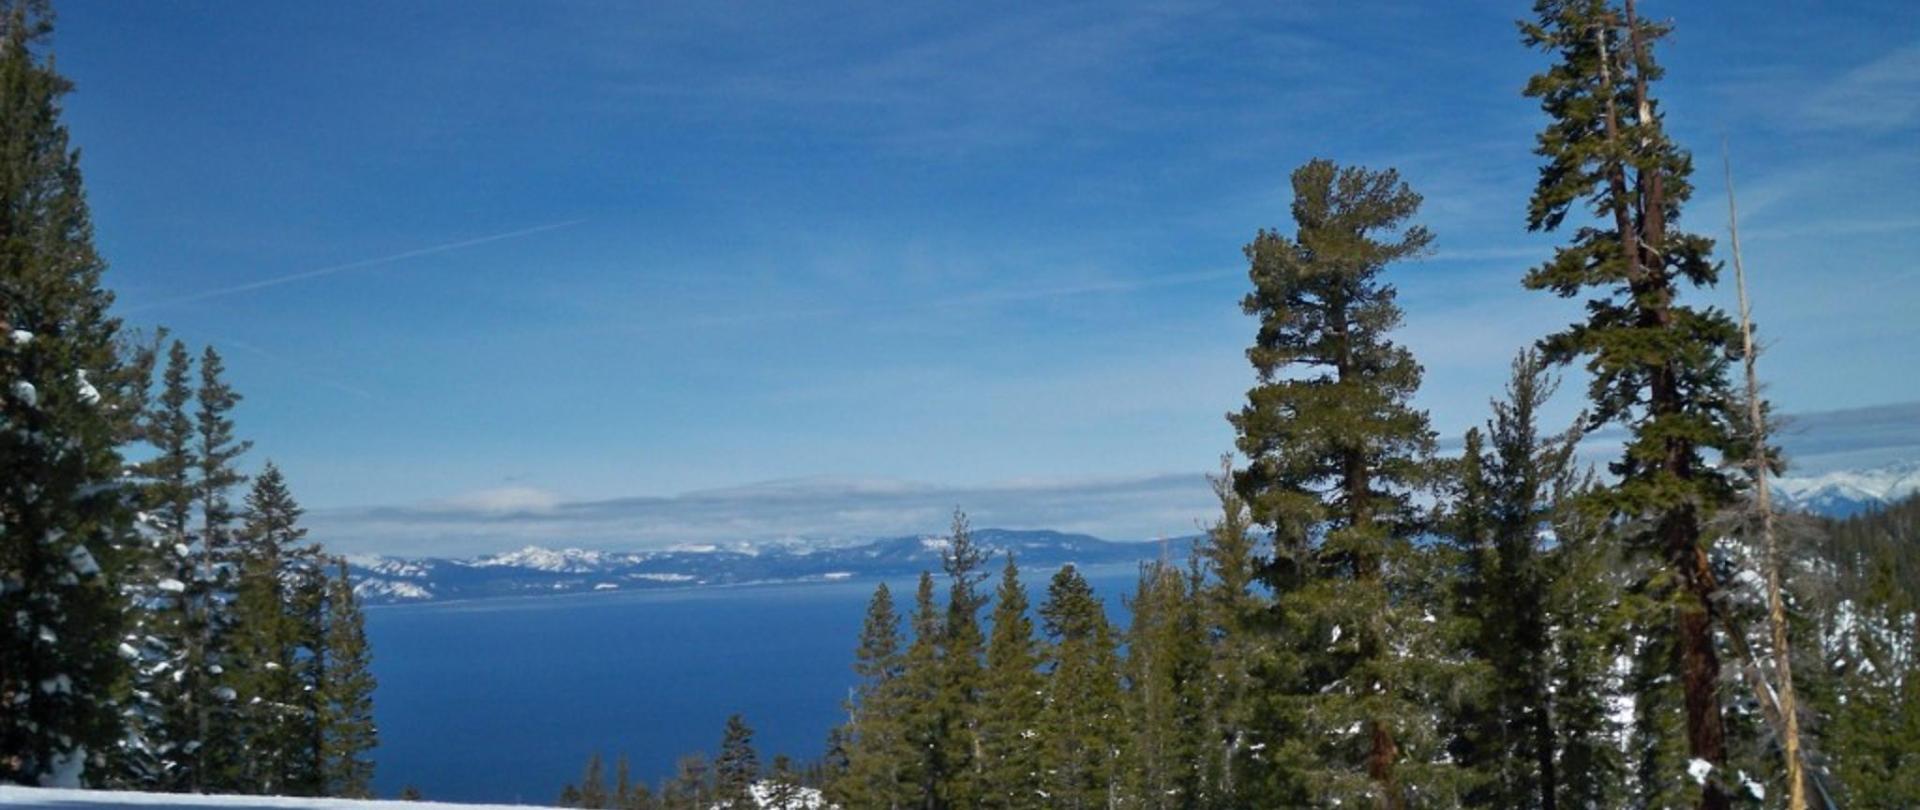 aa1_Lake-Tahoe-002-1024x768.jpg